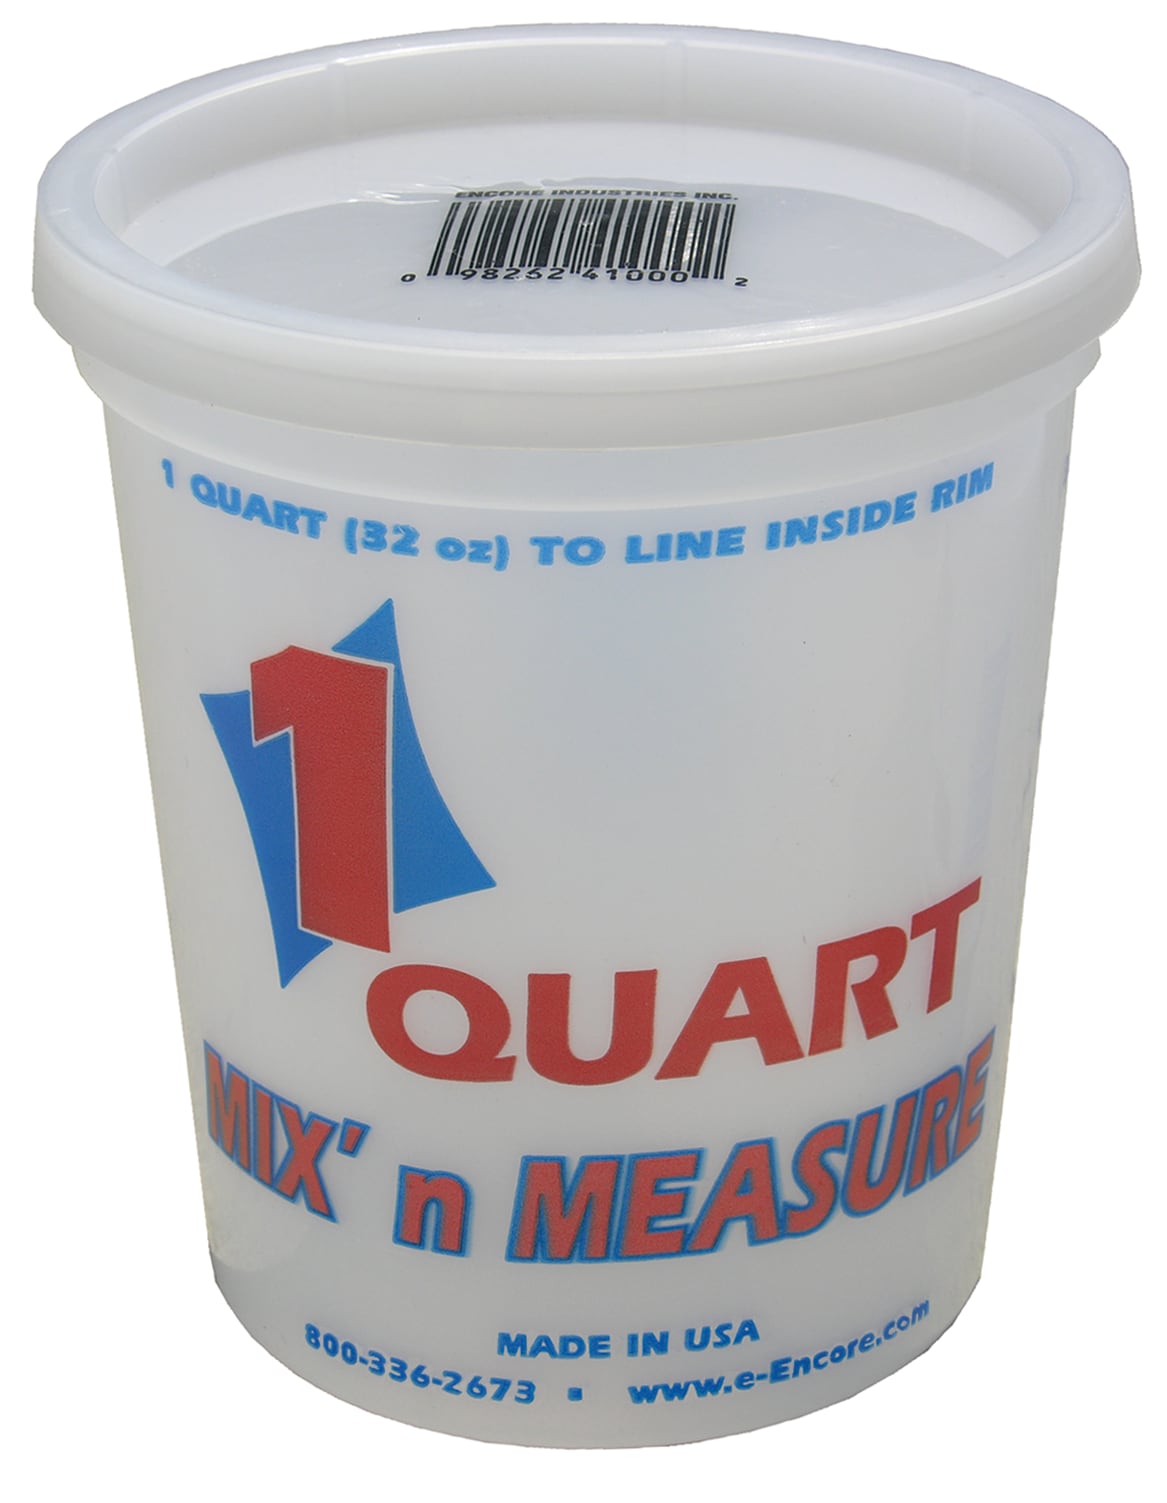 Ettore 3-Gallon Plastic Squeegee Bucket in the Buckets department